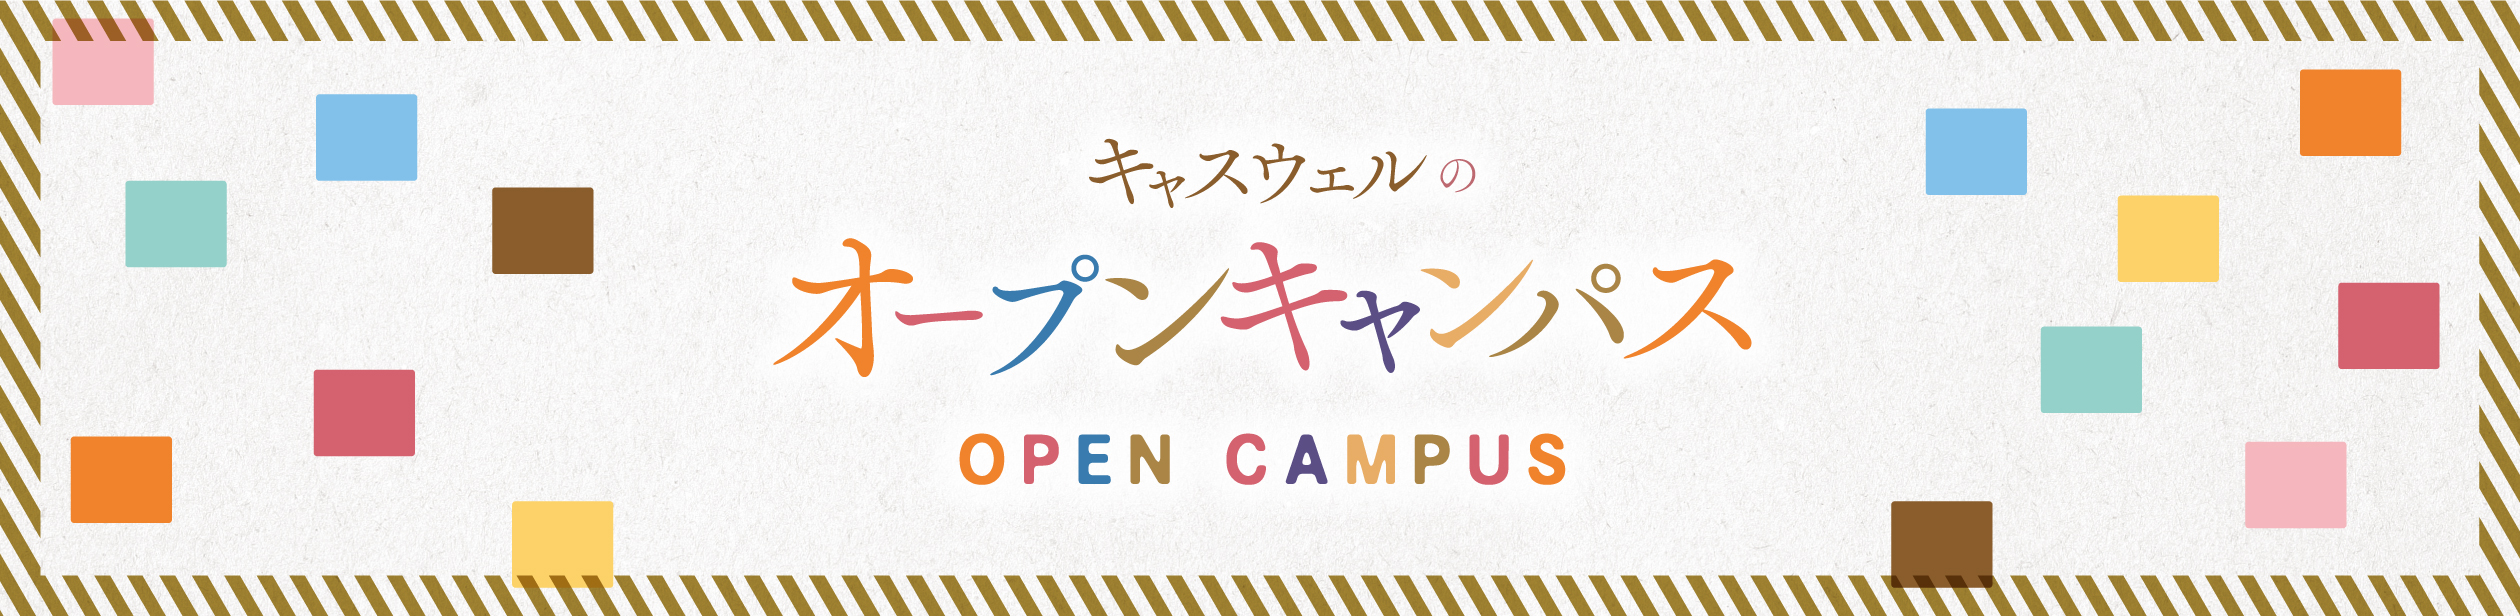 OPEN CAMPUS 秋のオープンキャンパス参加申し込み受付中!2018